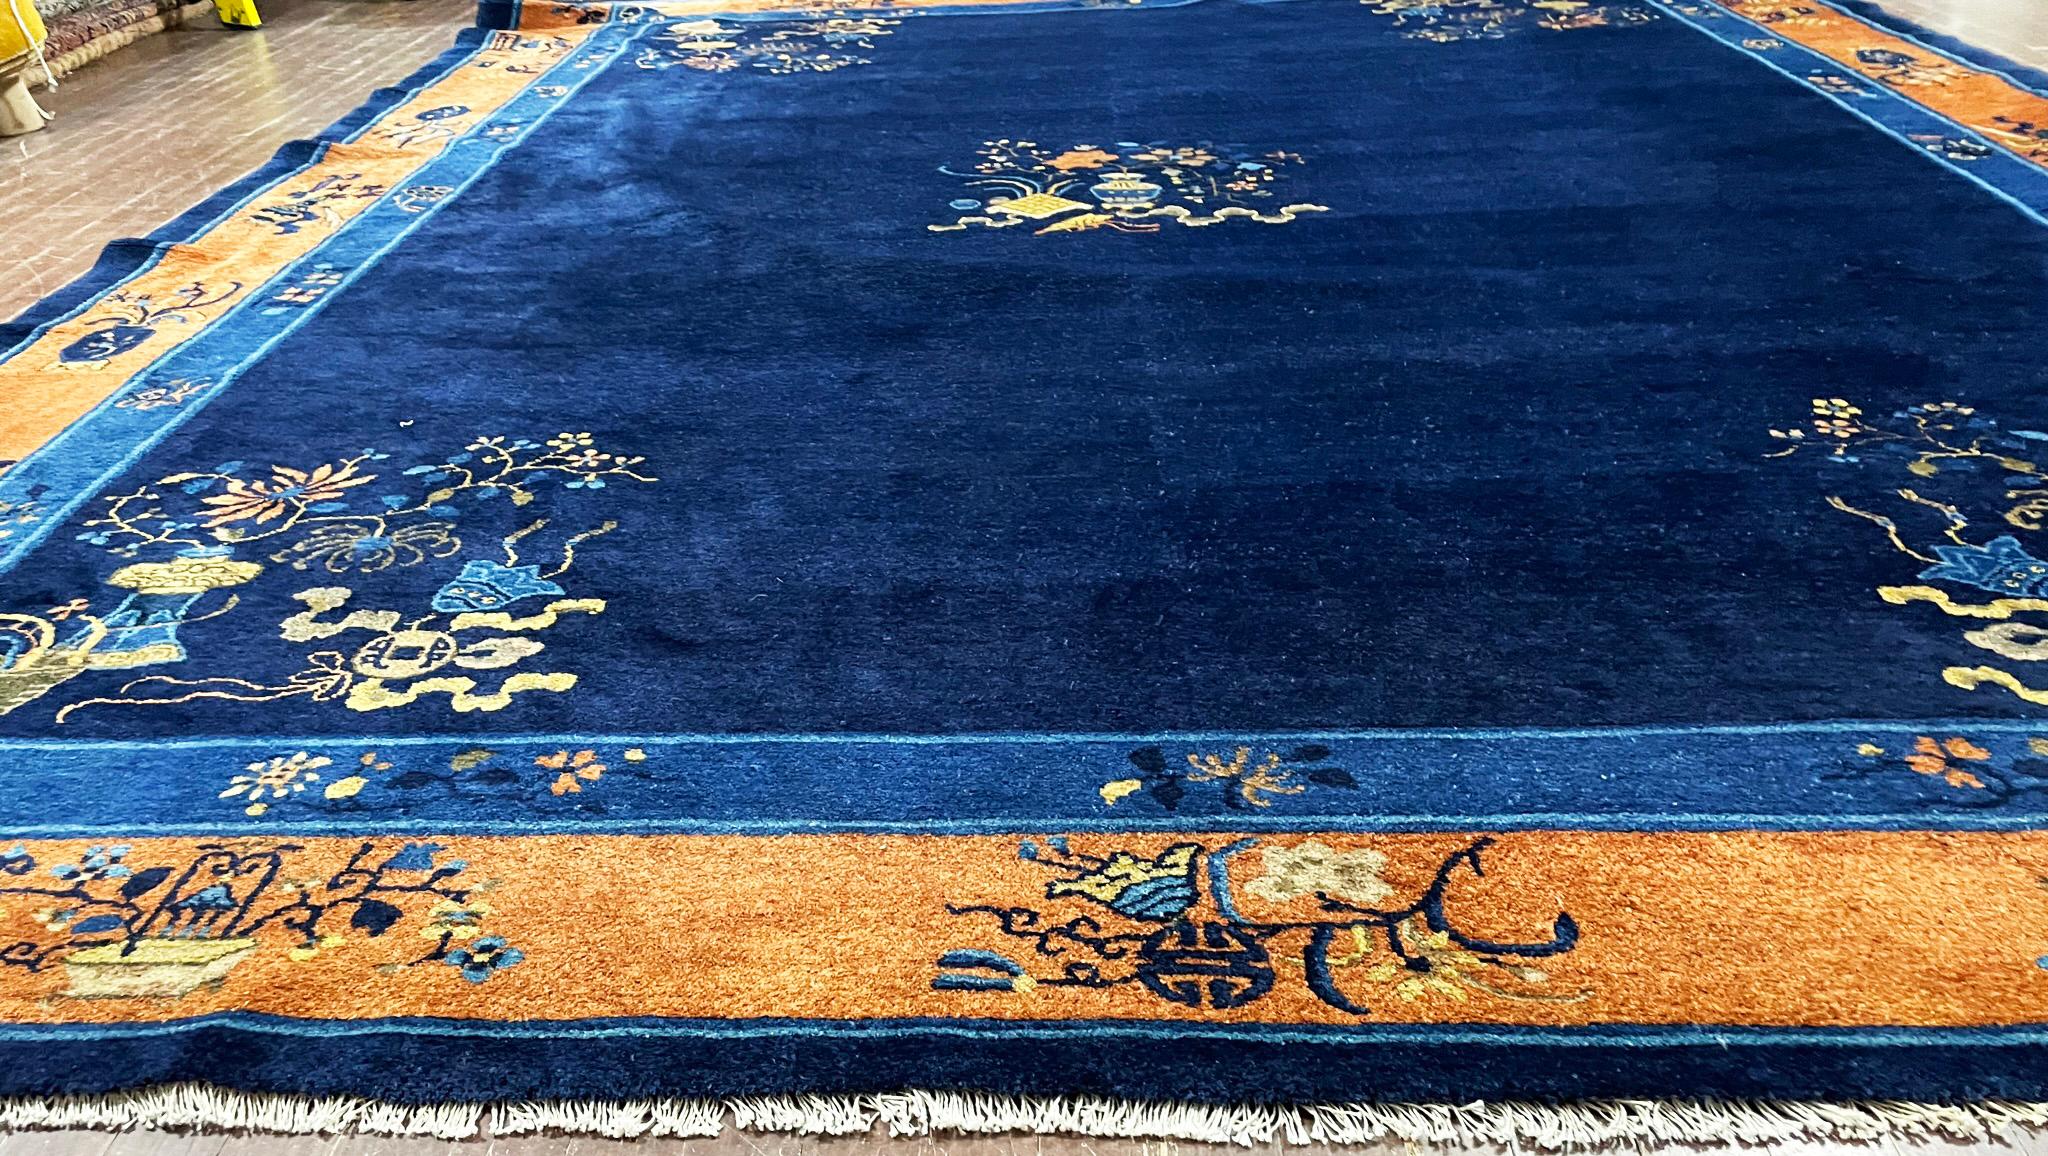 Antique Chinese Peking/Art Deco Carpet, C-1910 For Sale 4